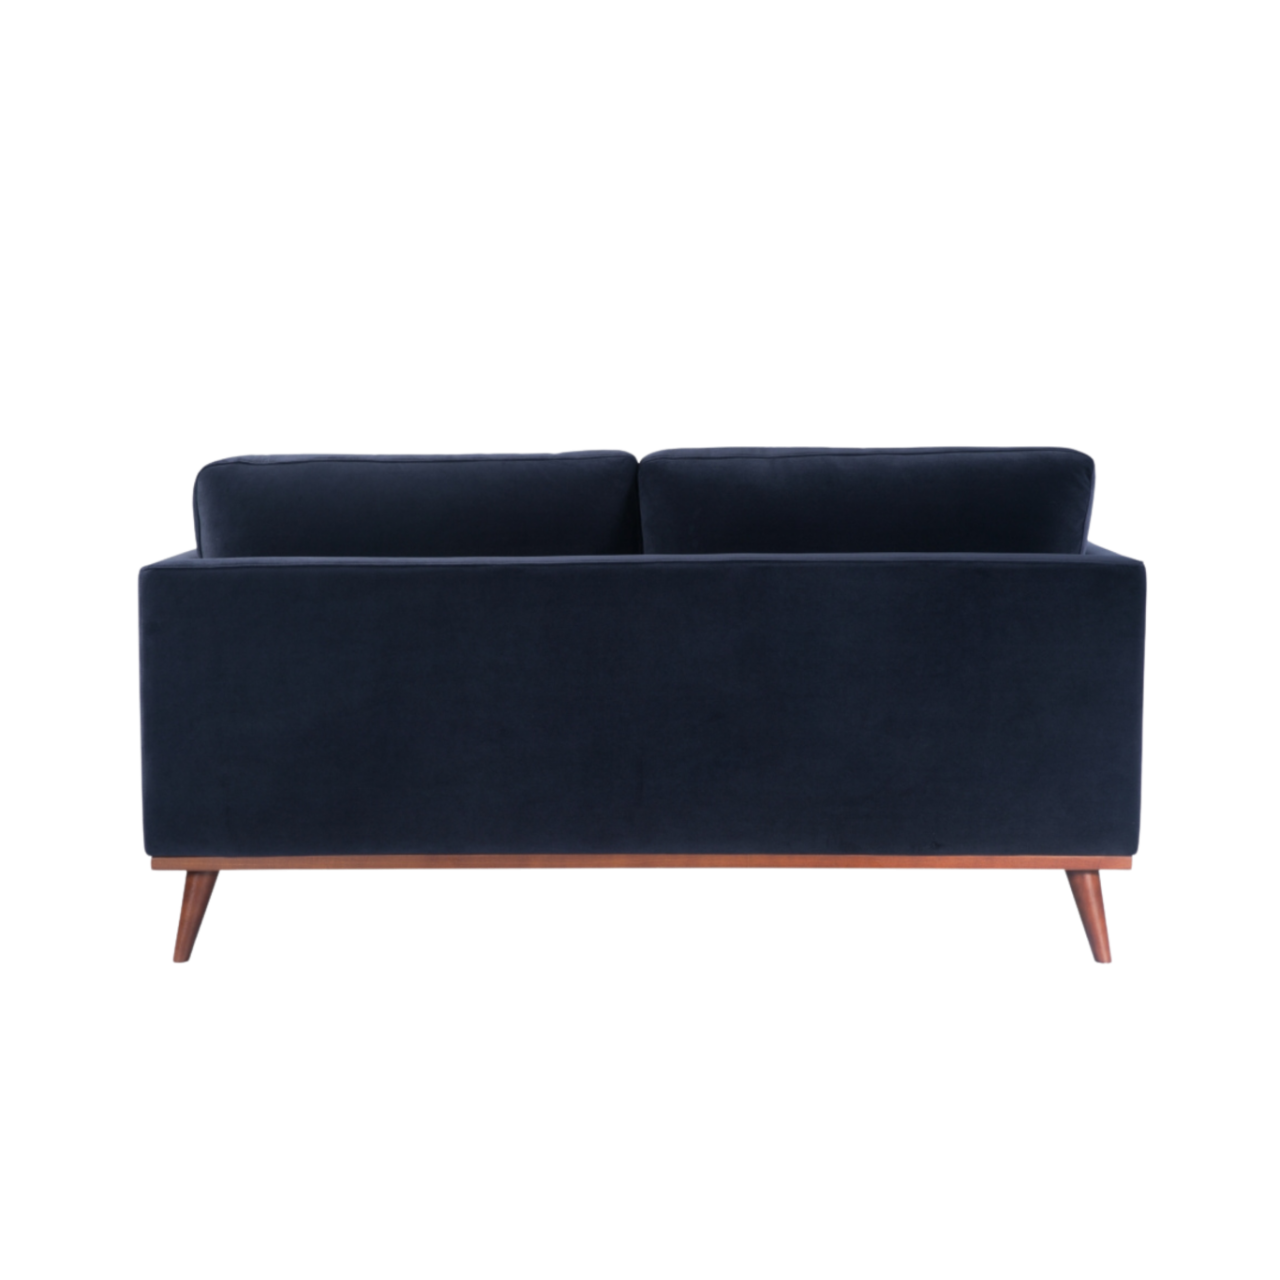 back view of Simple, modern shaped 2 seater sofa in midnight blue velvet upholstery